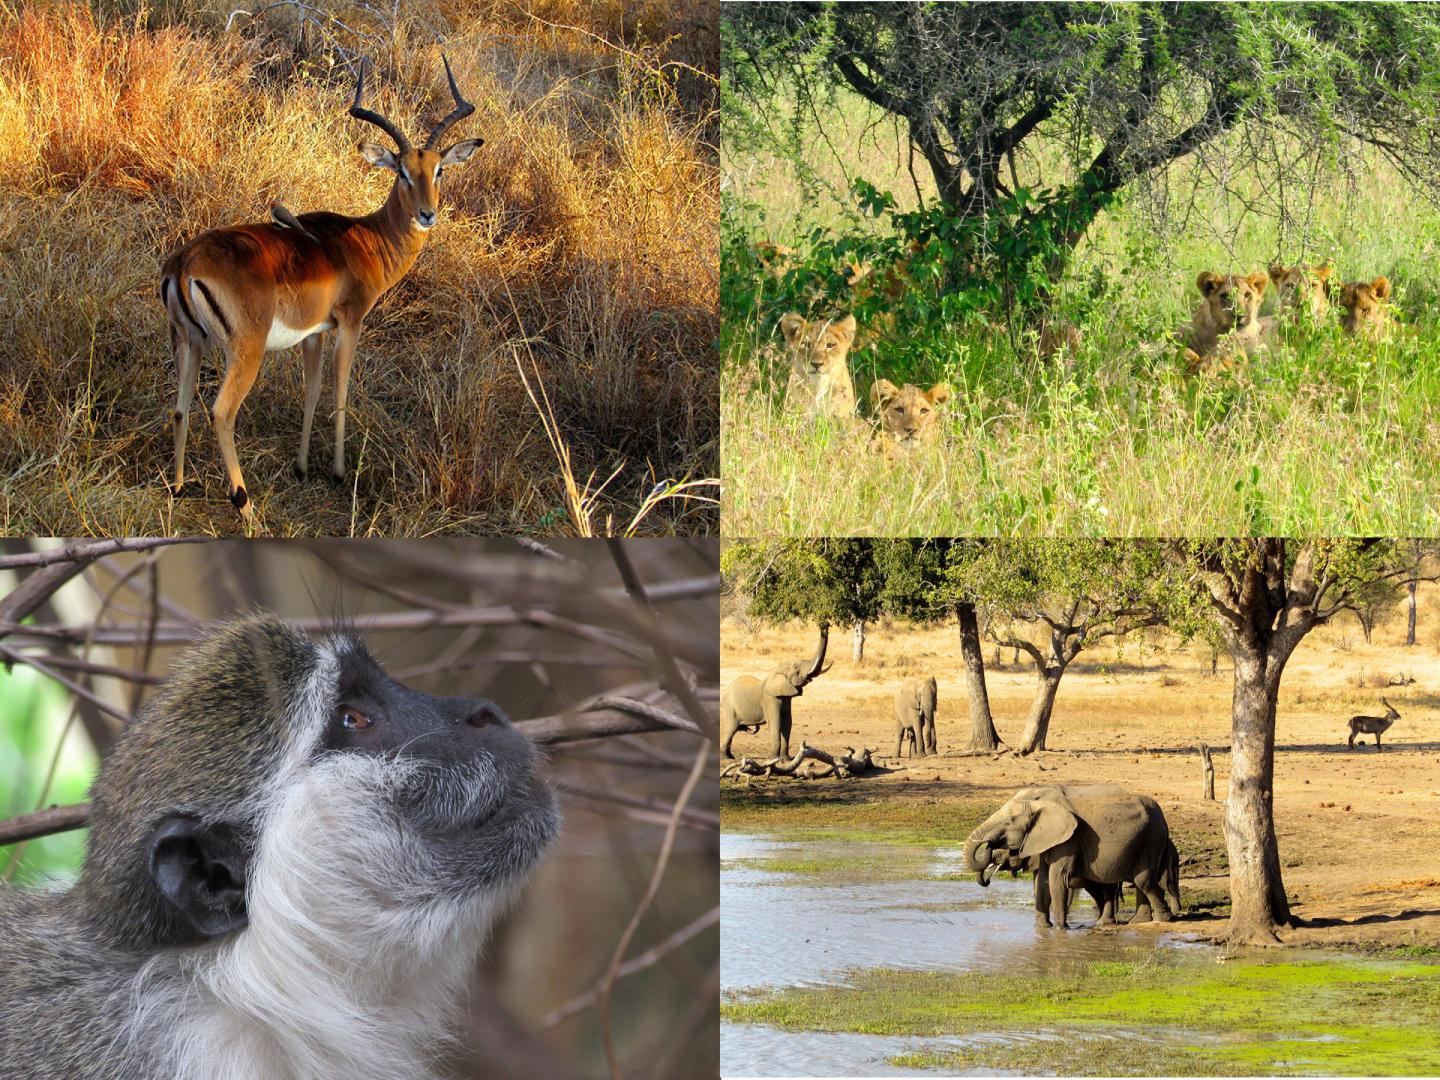 Mammal groups